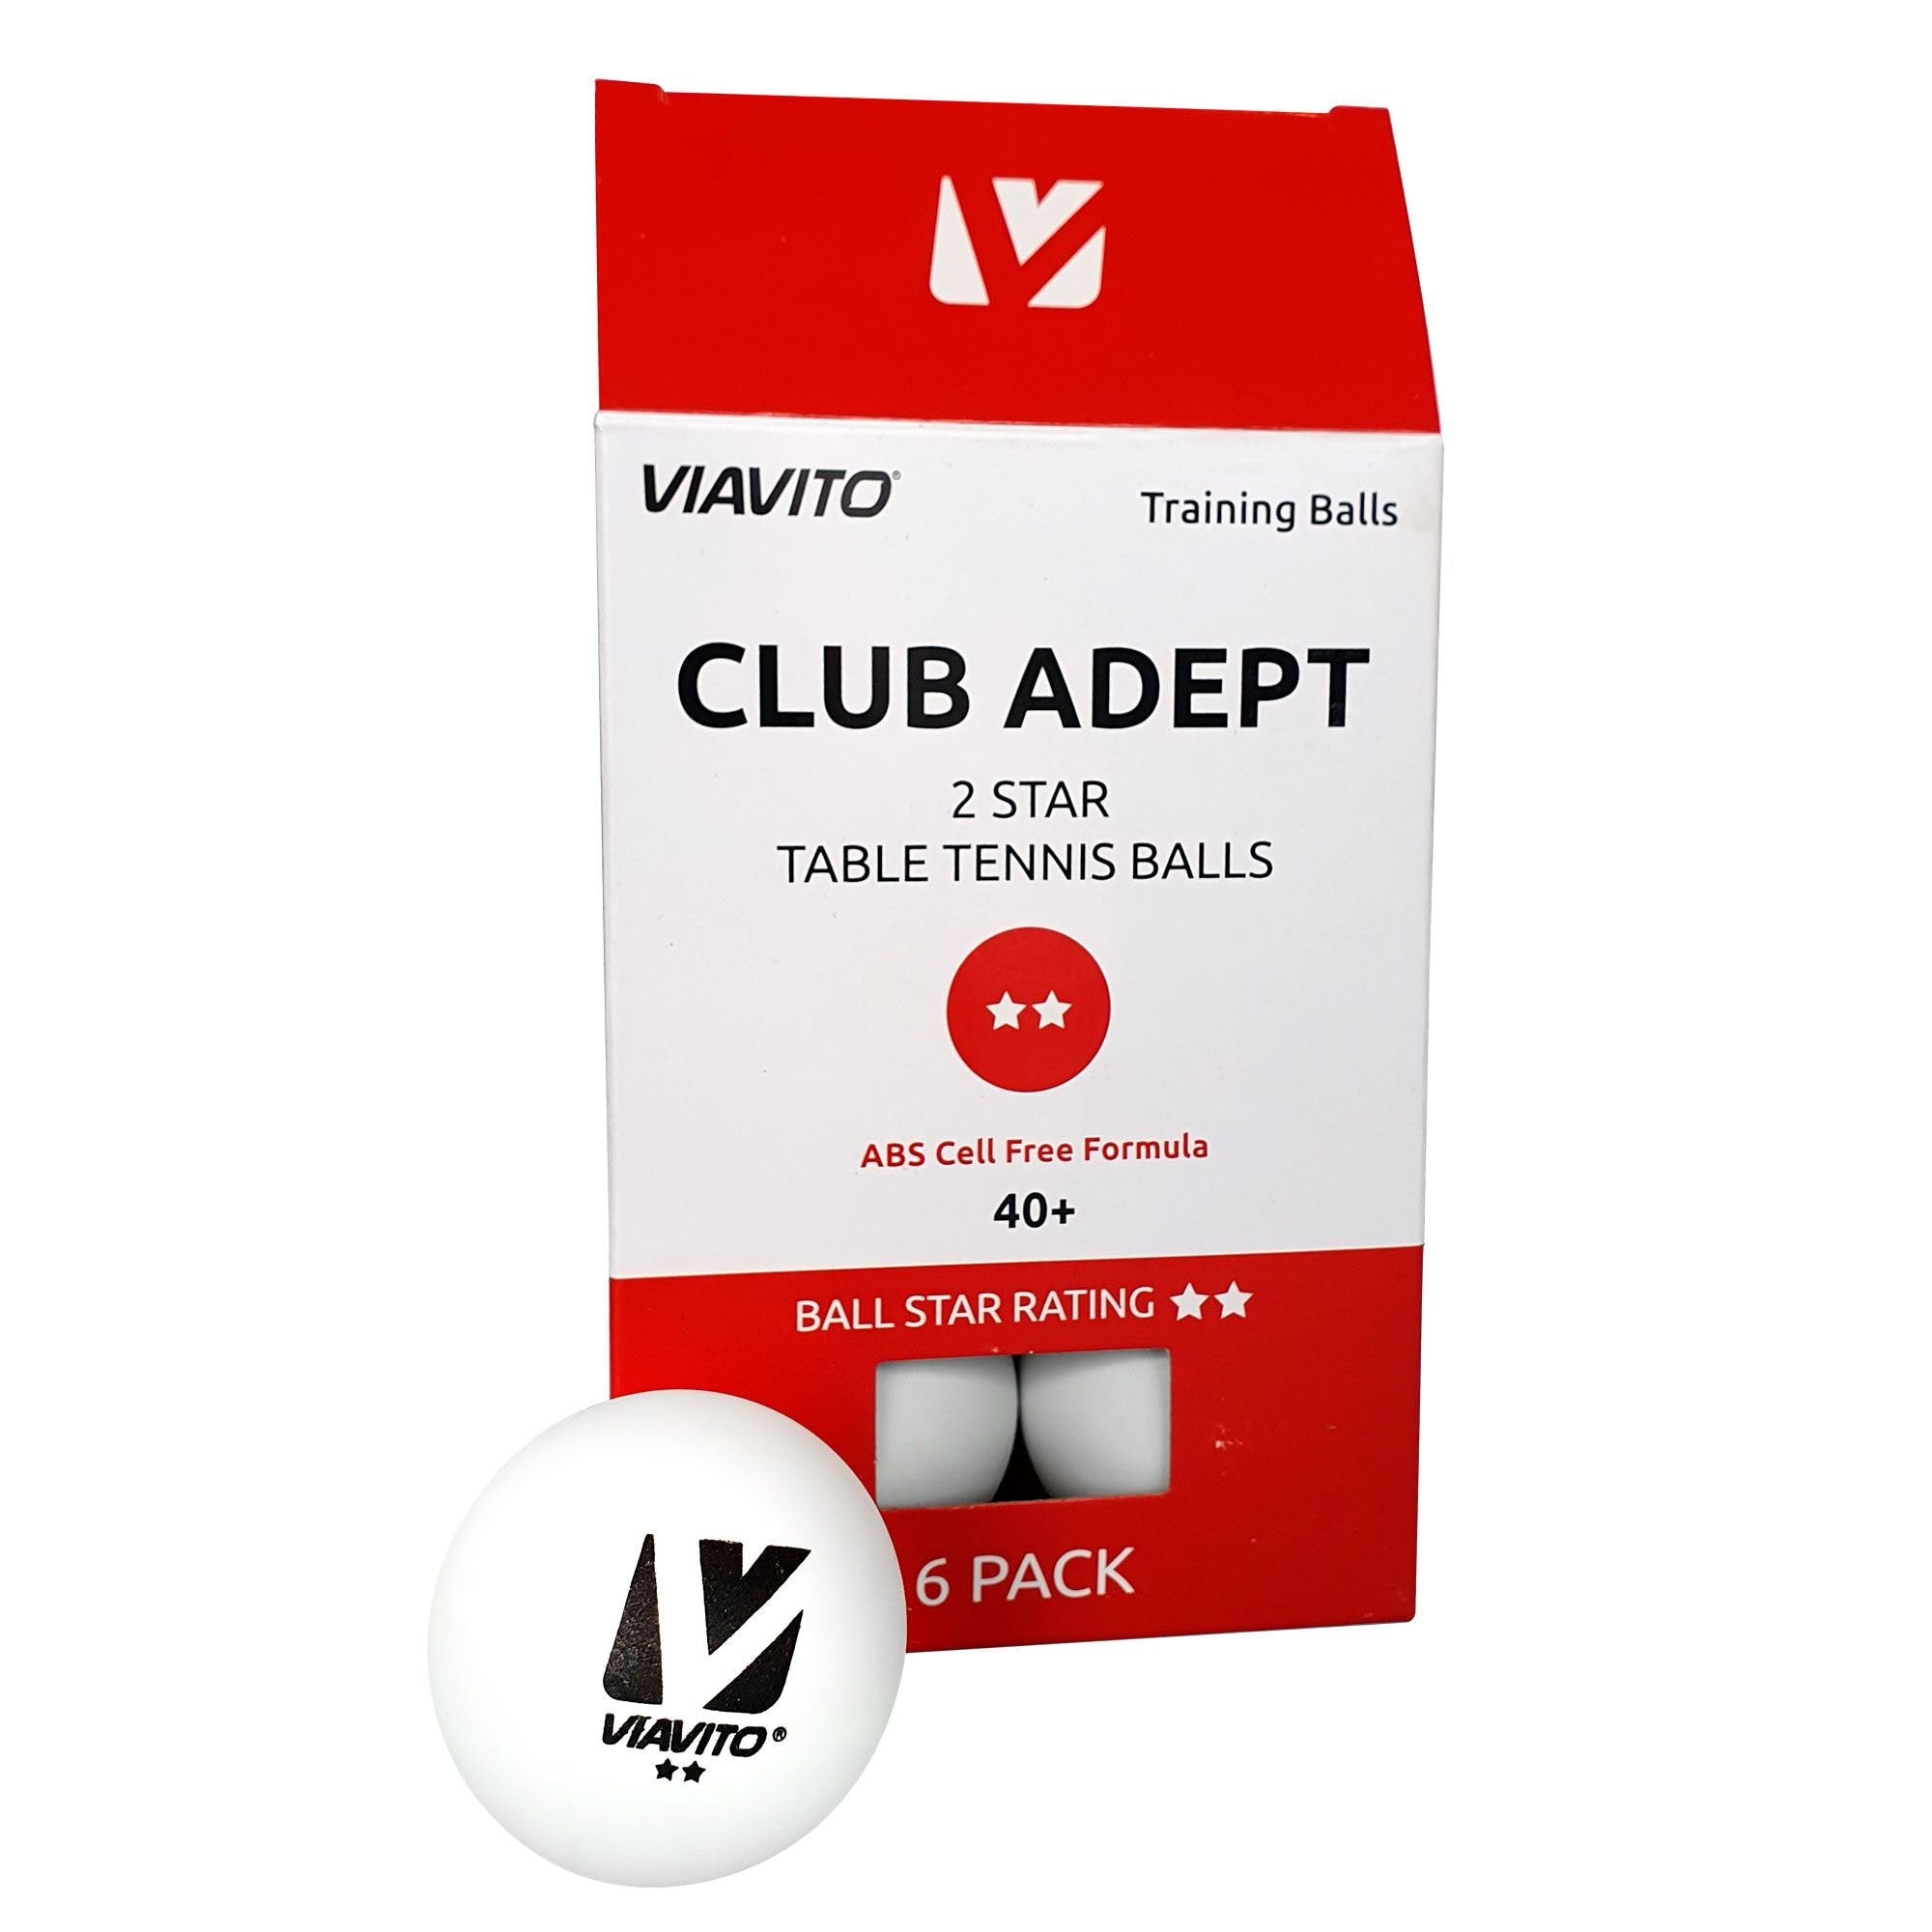 Viavito Club Adept 2 Star Table Tennis Balls - Pack of 6